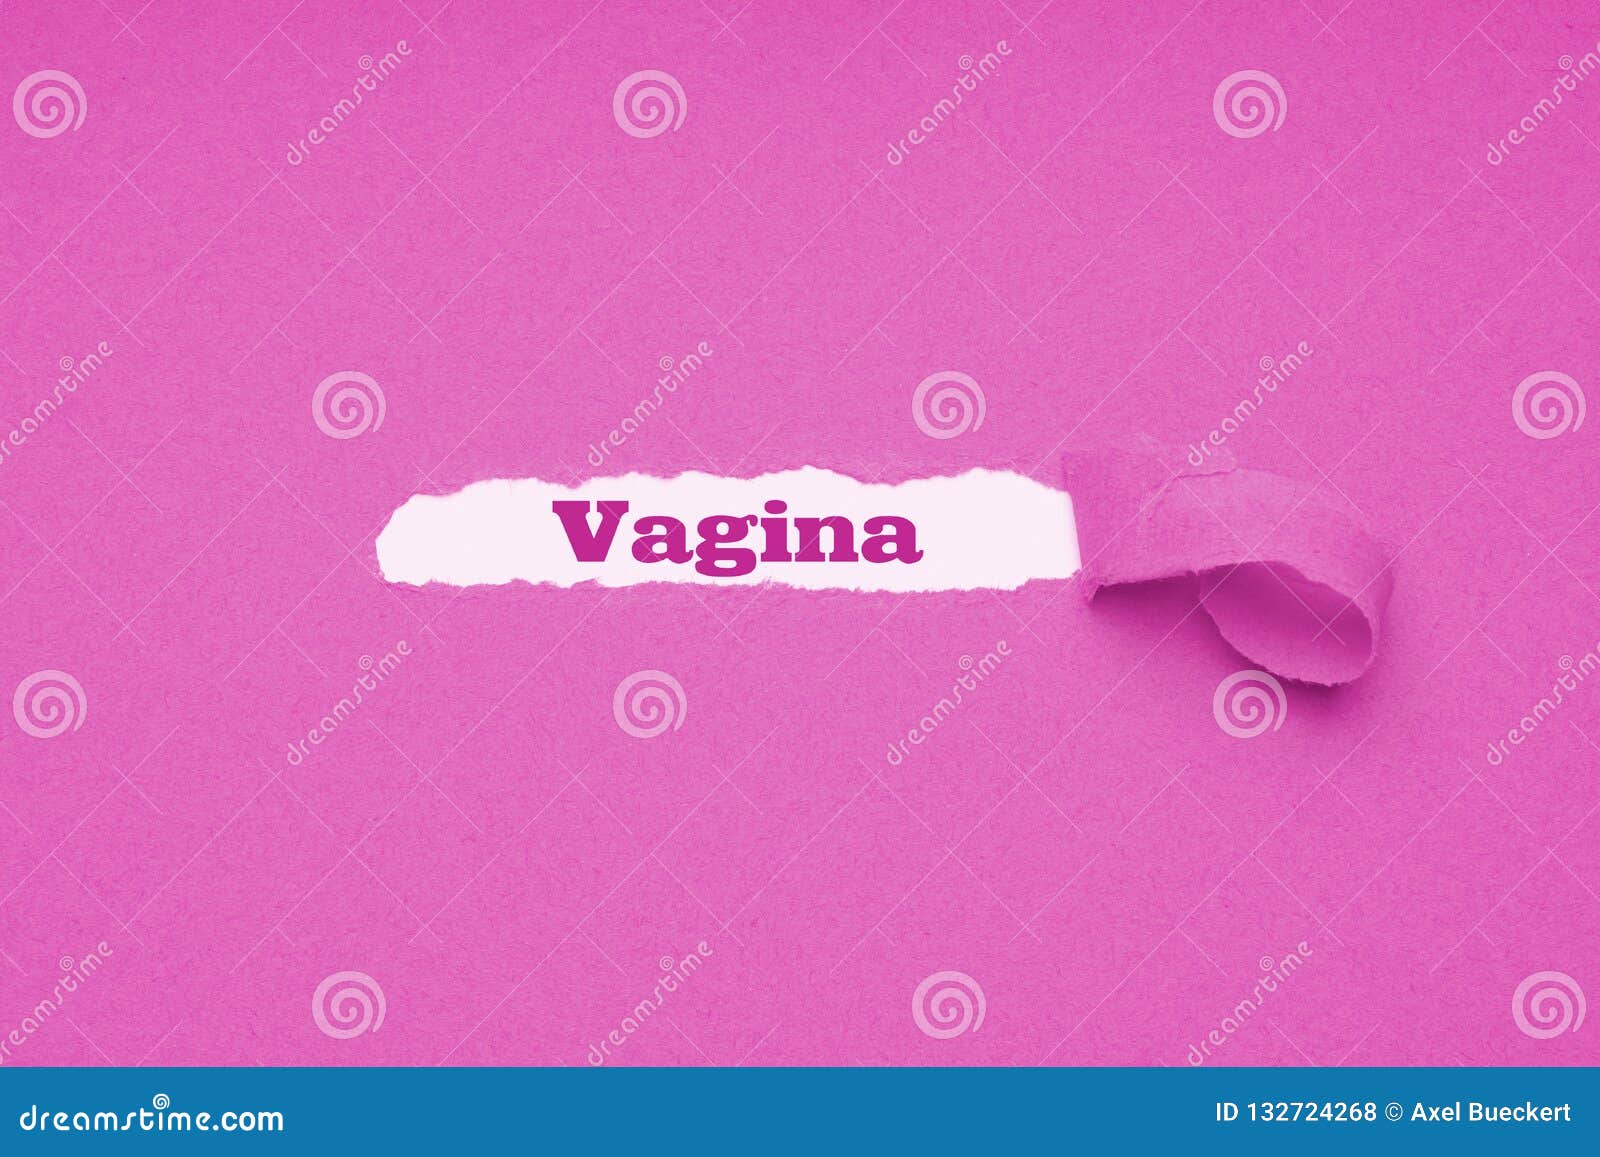 vagina word revealed underneath torn pink paper